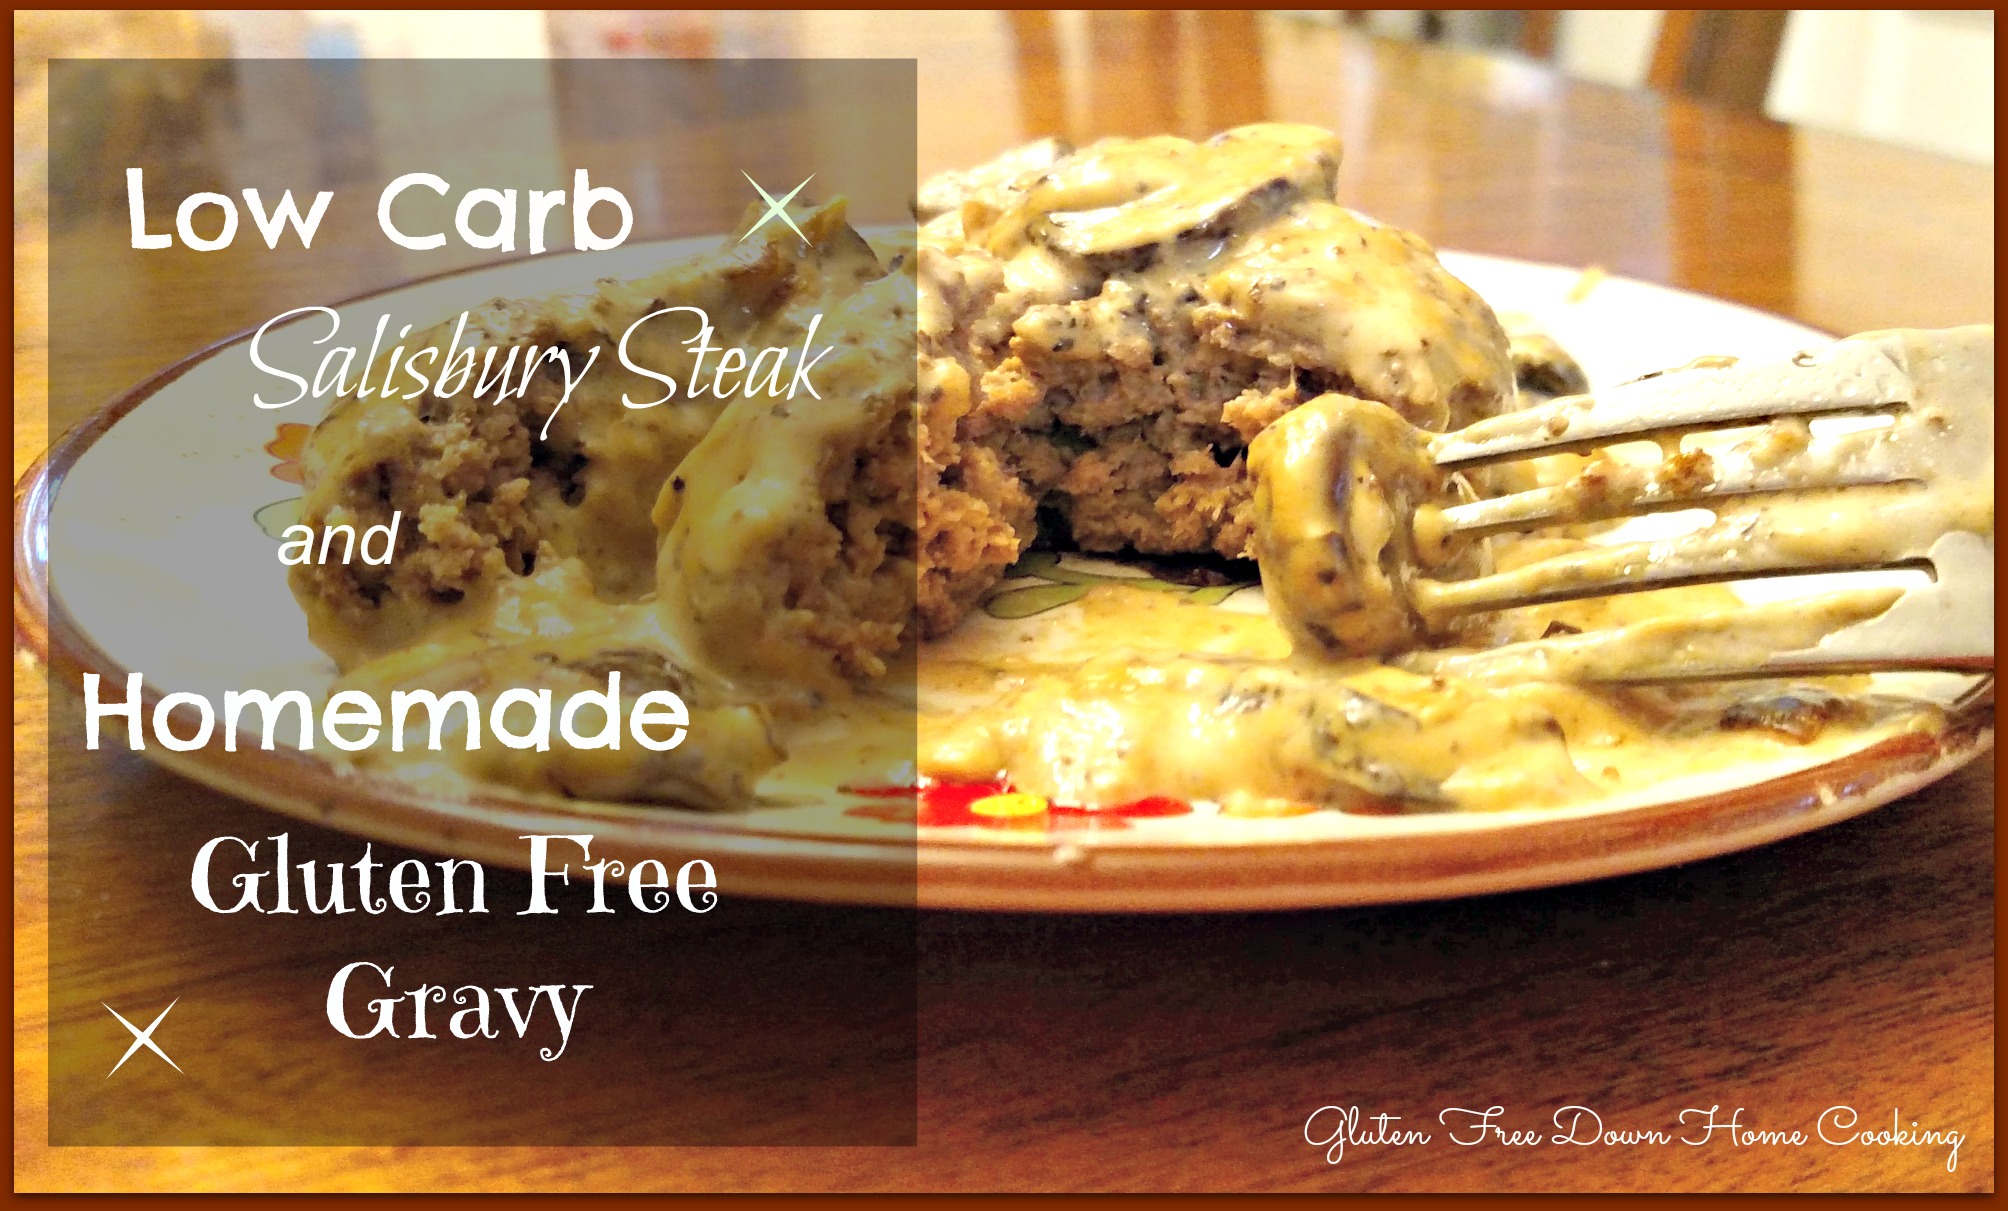 Low Carb Salisbury Steak and Homemade Gluten Free Gravy